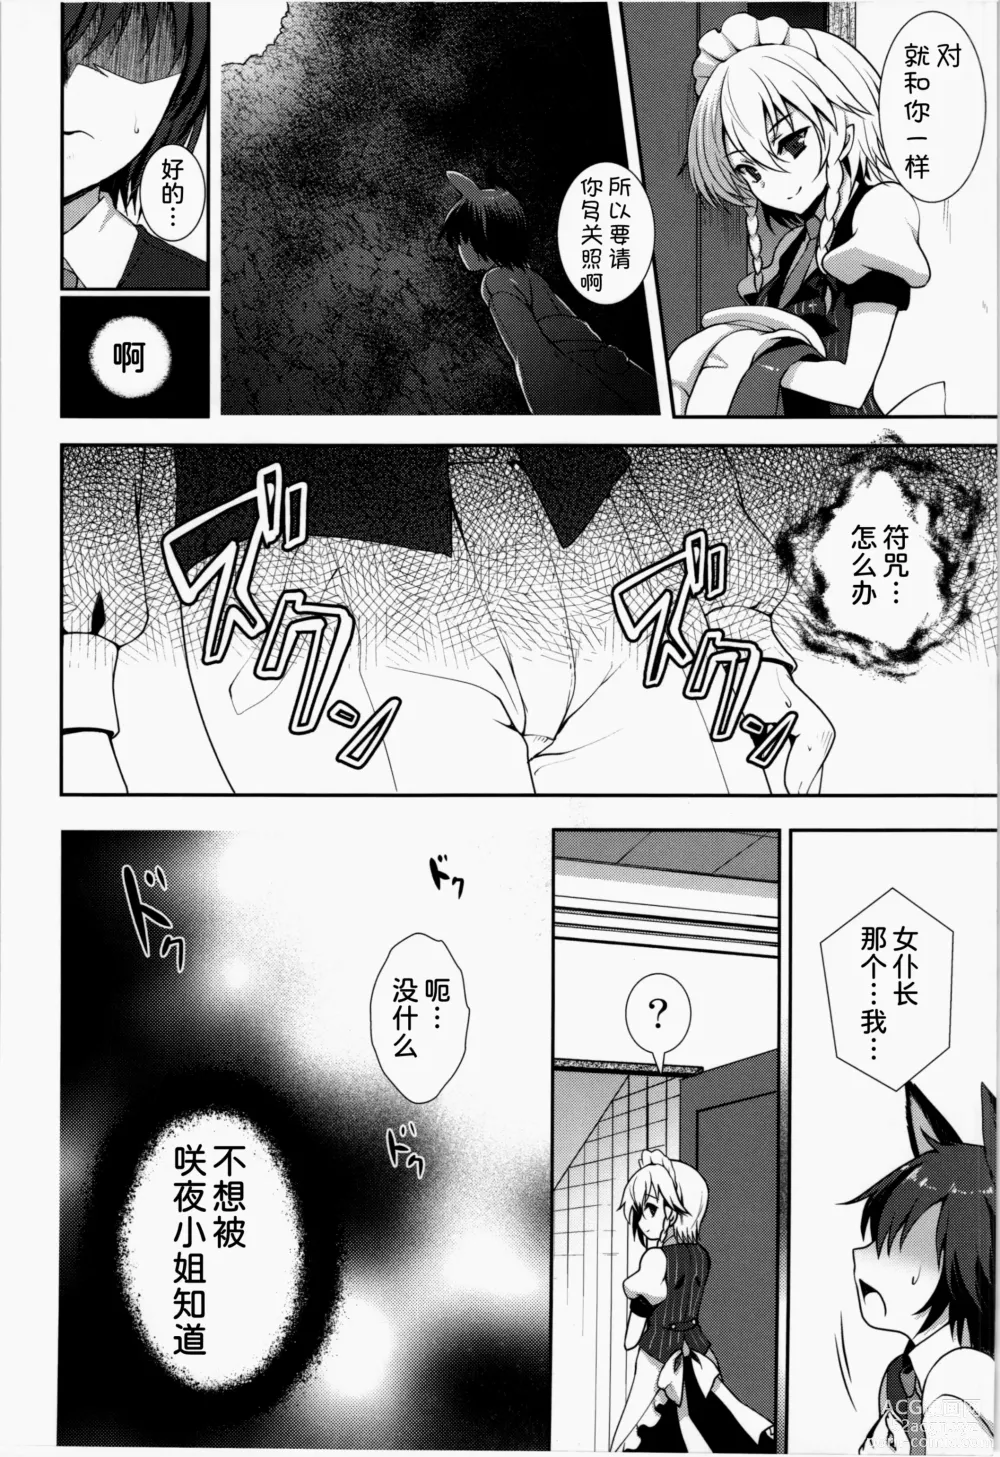 Page 13 of doujinshi concern